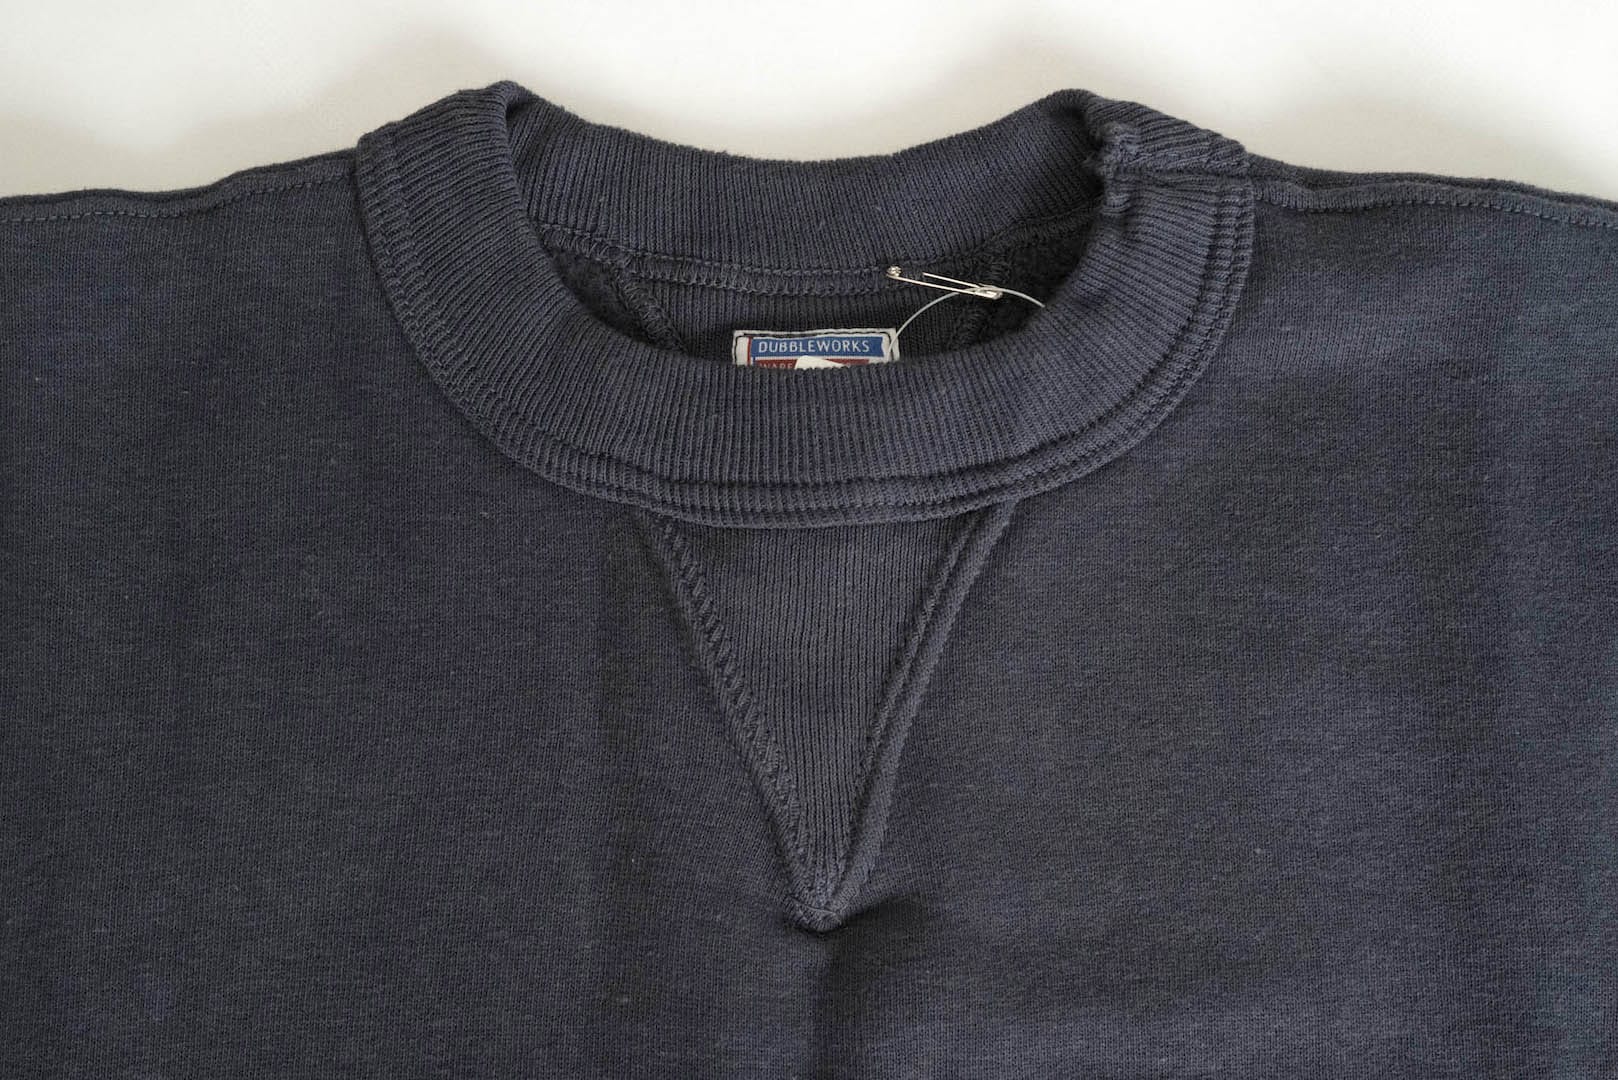 Dubble Works 11oz "Tsuri-ami" Loopwheeled Sweatshirt (Vintage Navy)